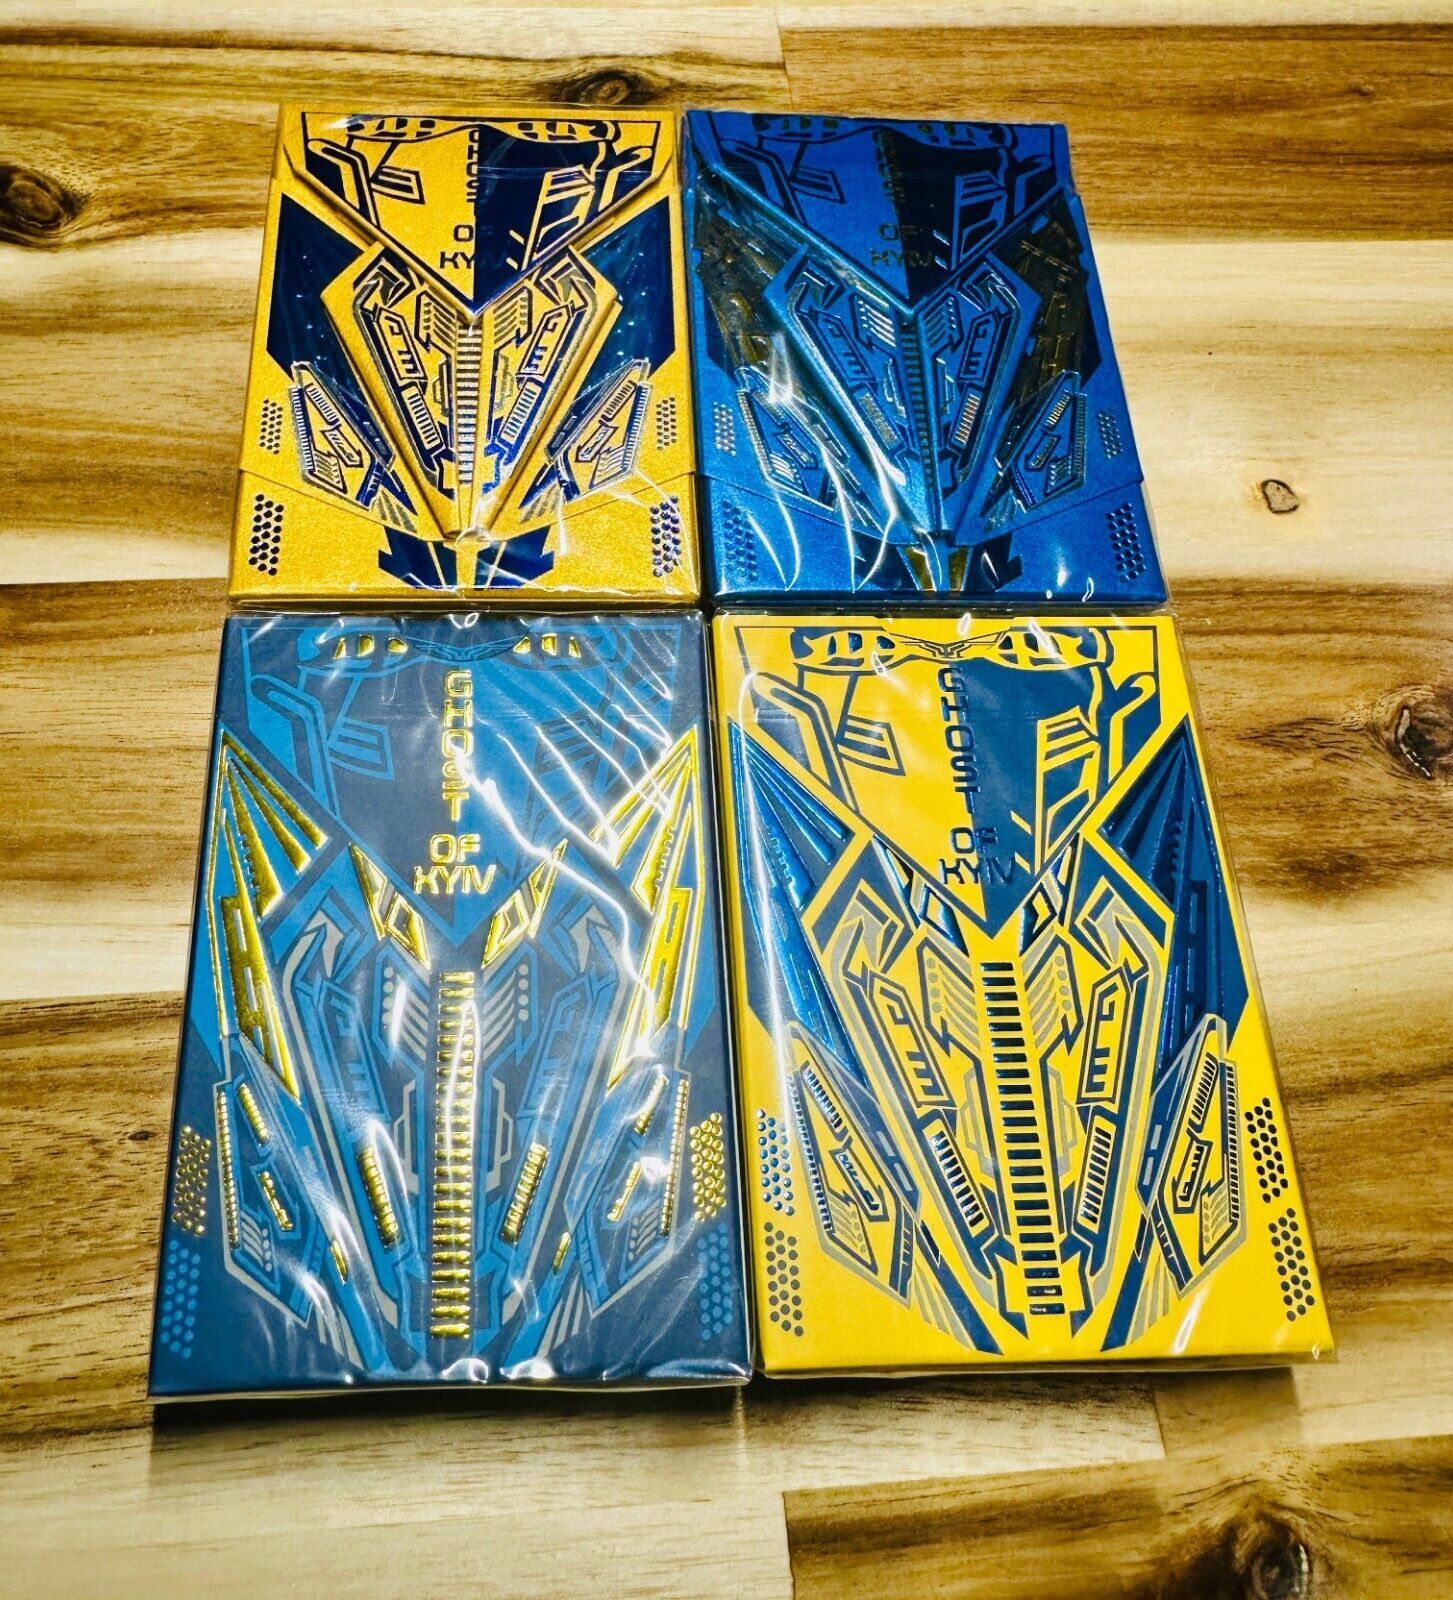 GHOST OF KYIV: 4 Decks of Playing Cards (2 folding tucks)